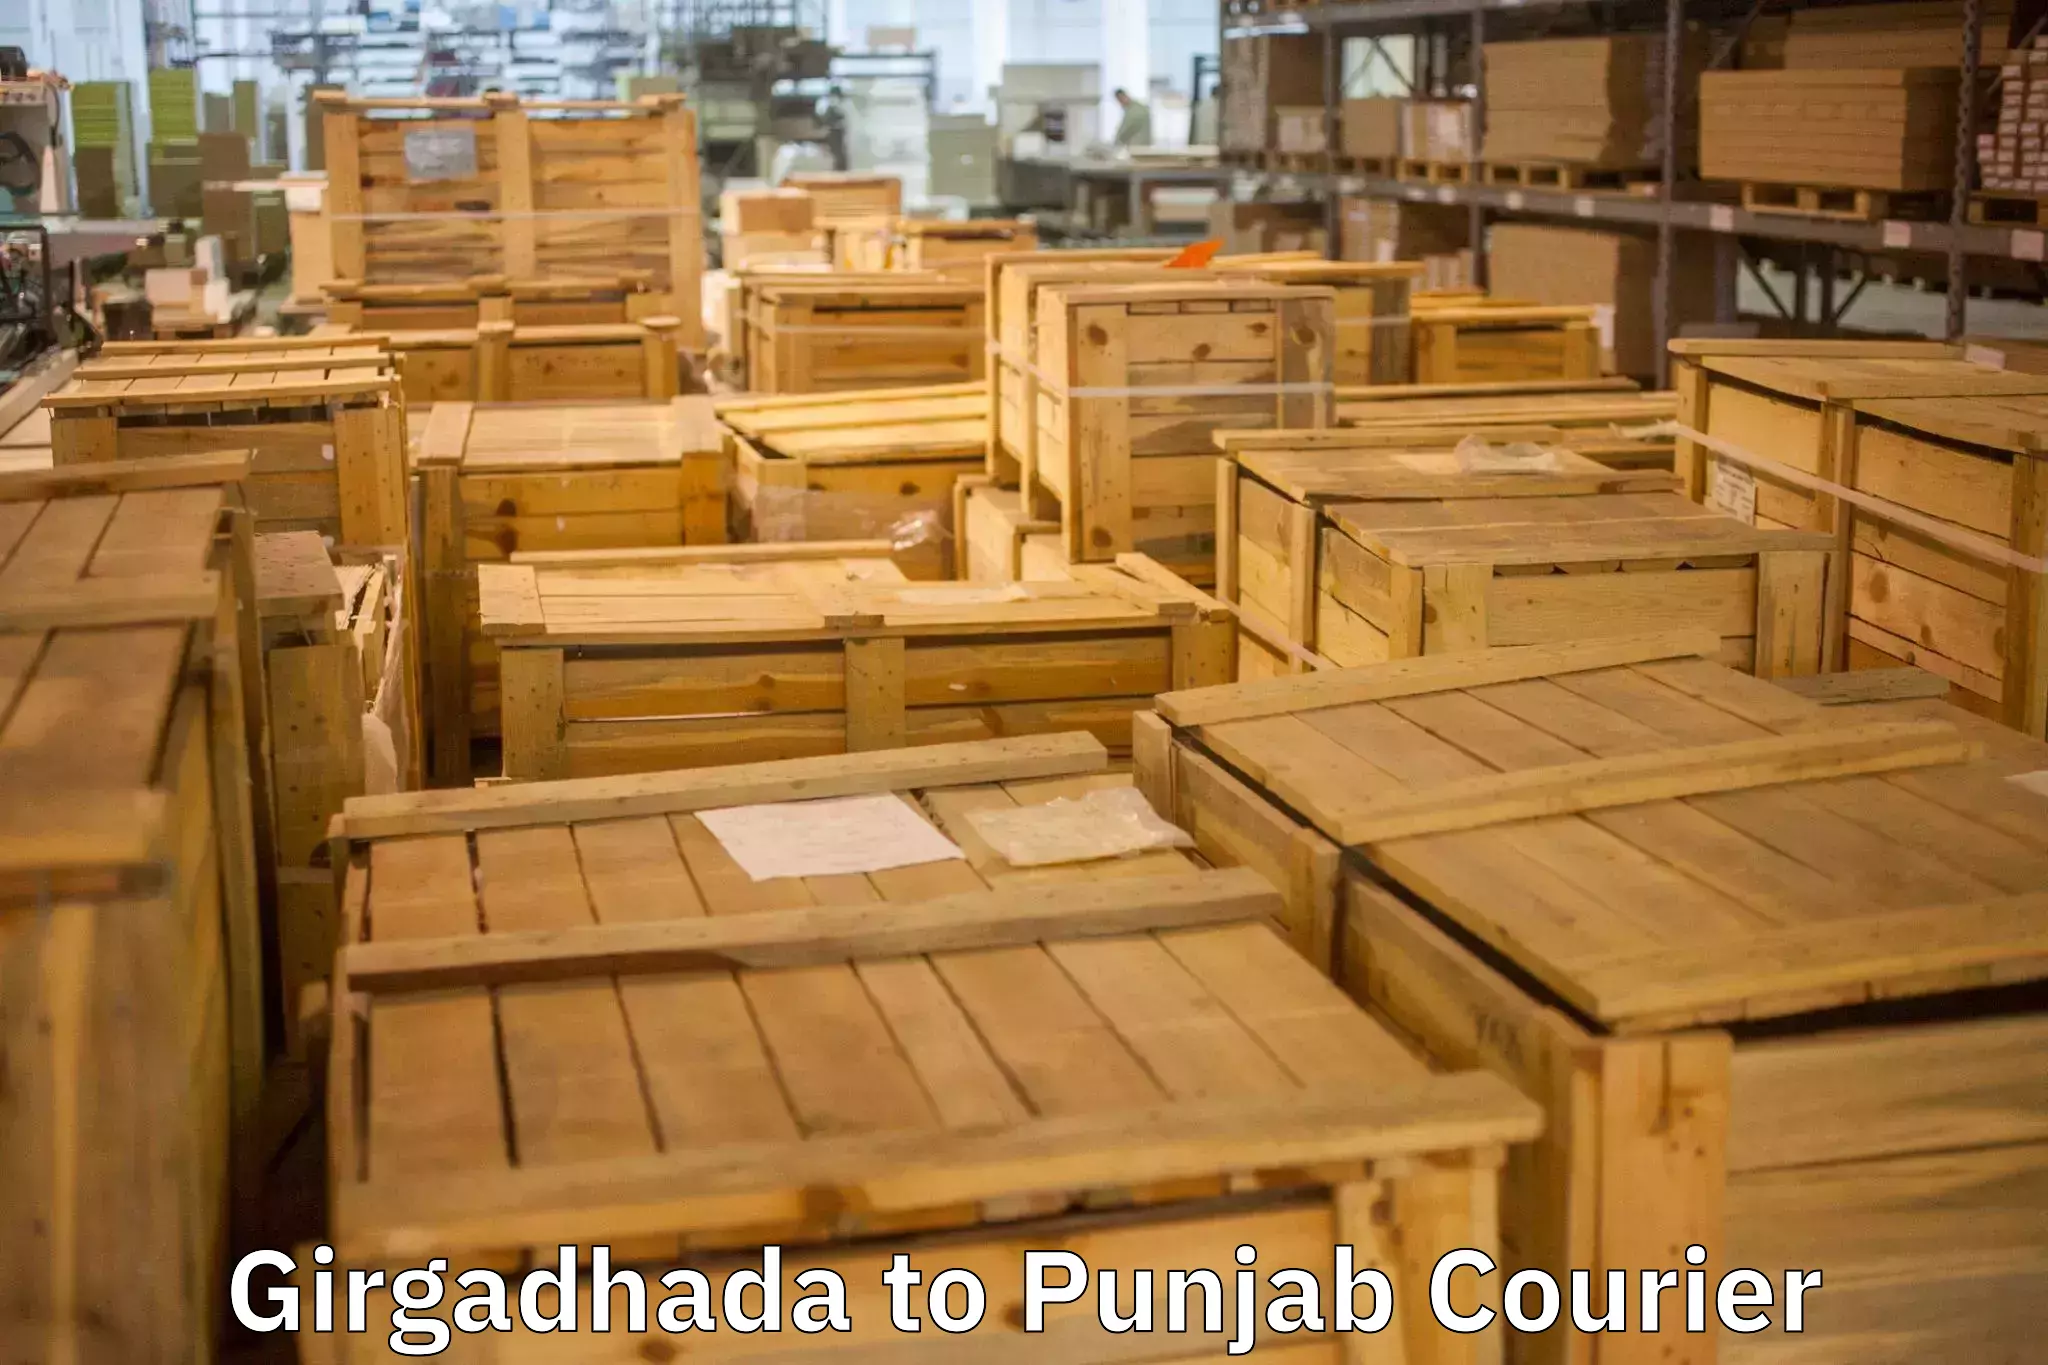 Quality moving company in Girgadhada to Gurdaspur